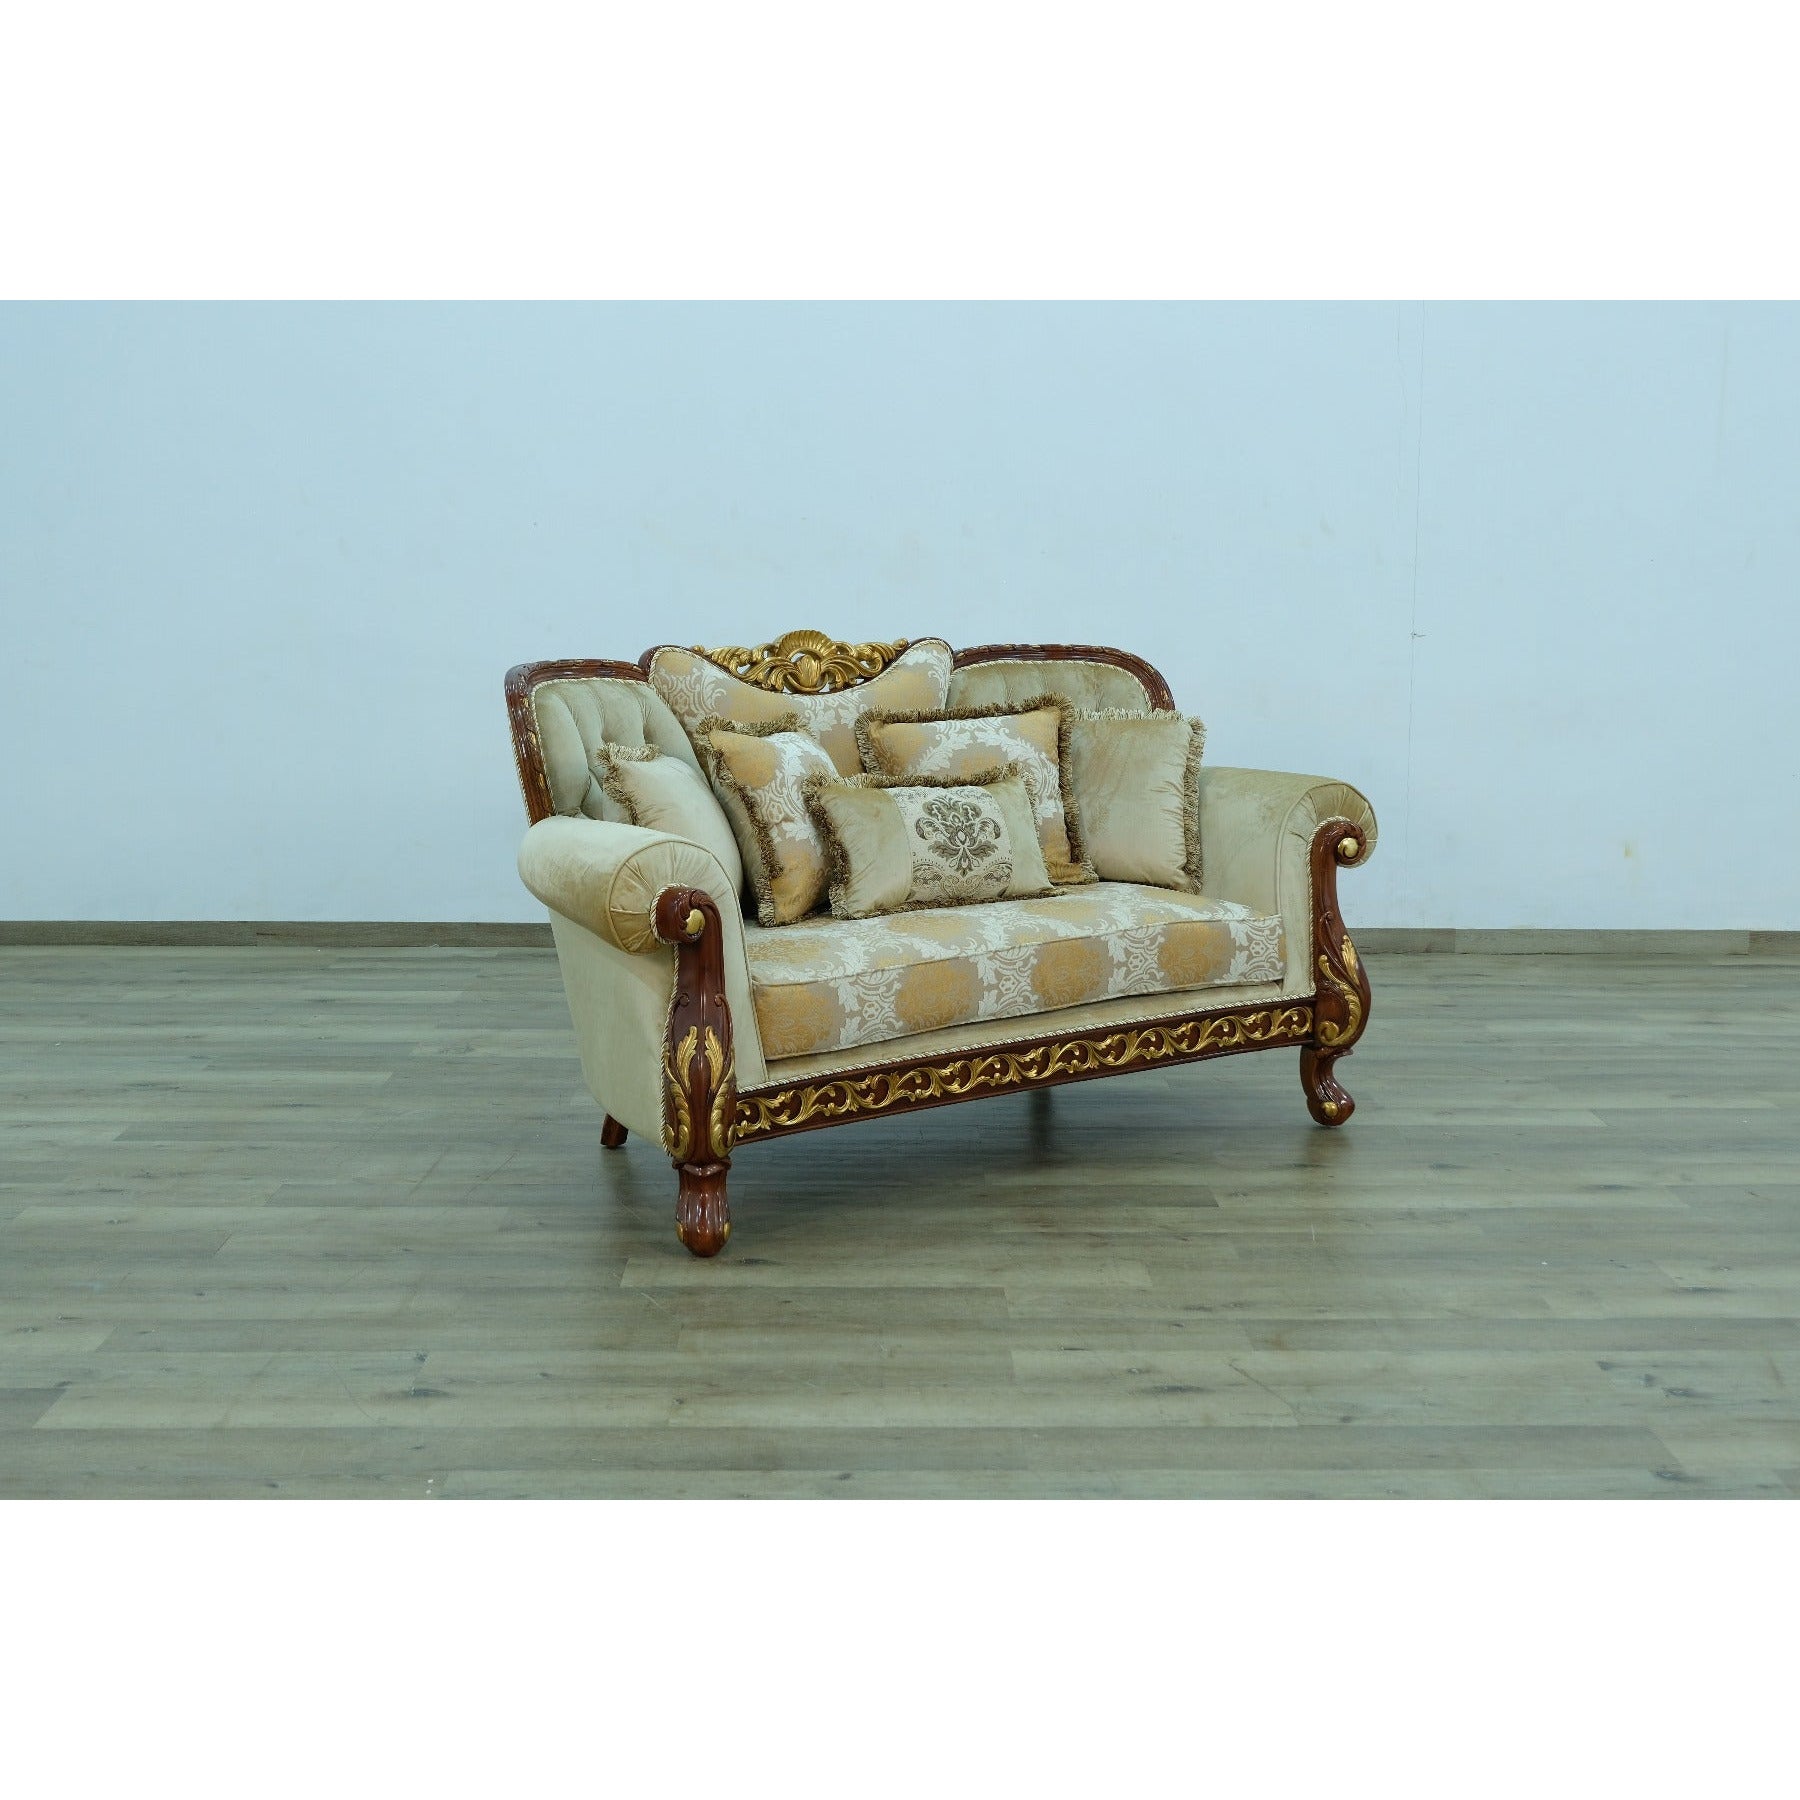 European Furniture - Fantasia II 2 Piece Living Room Set in Gold-Brown - 40019-2SET - New Star Living